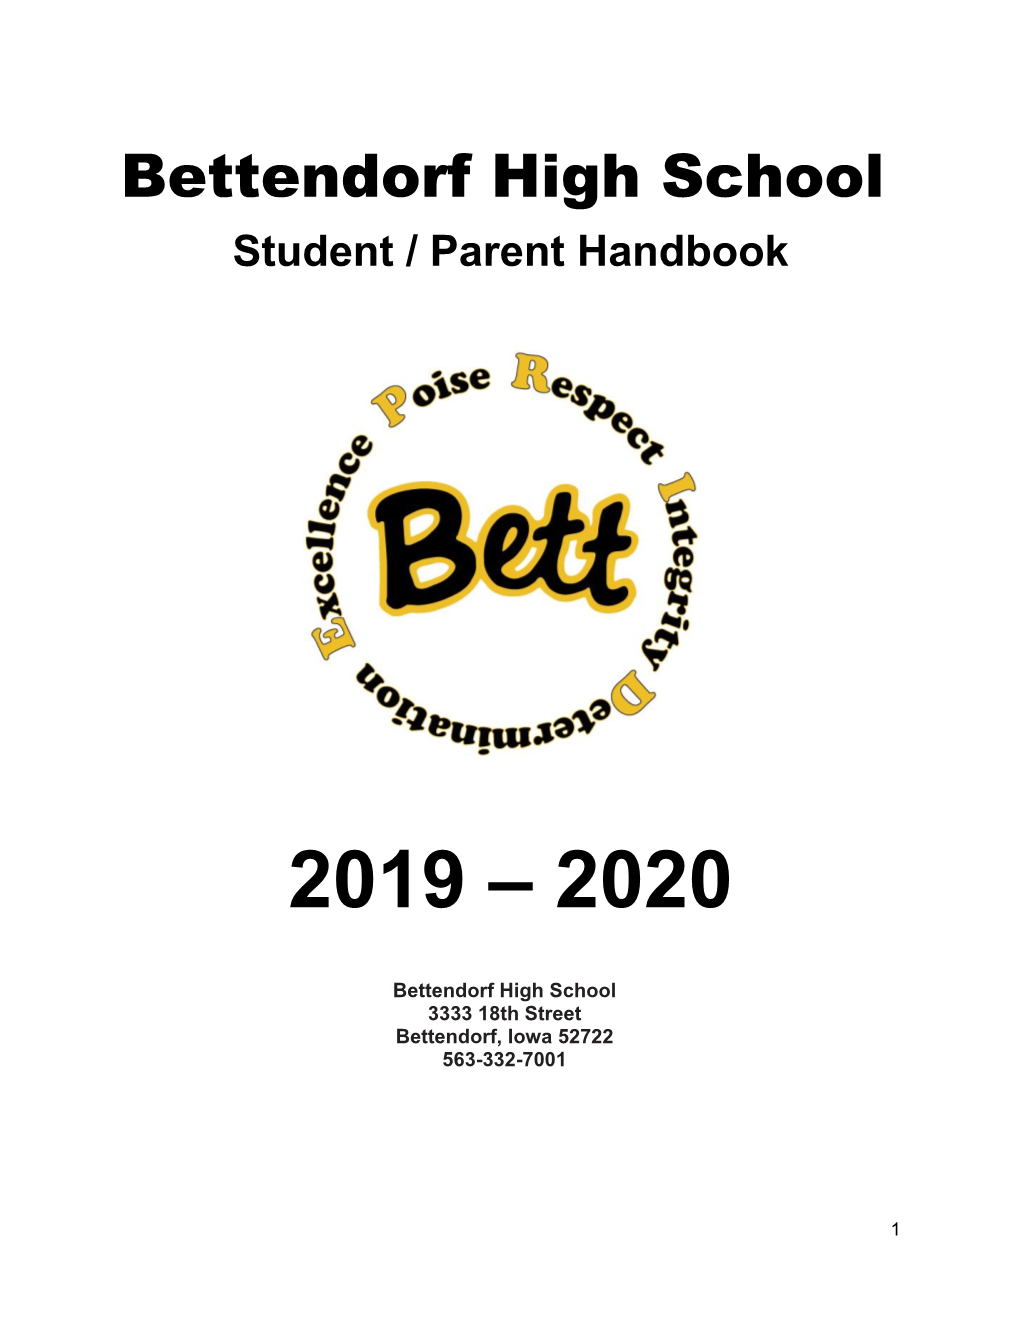 Bettendorf High School Student / Parent Handbook